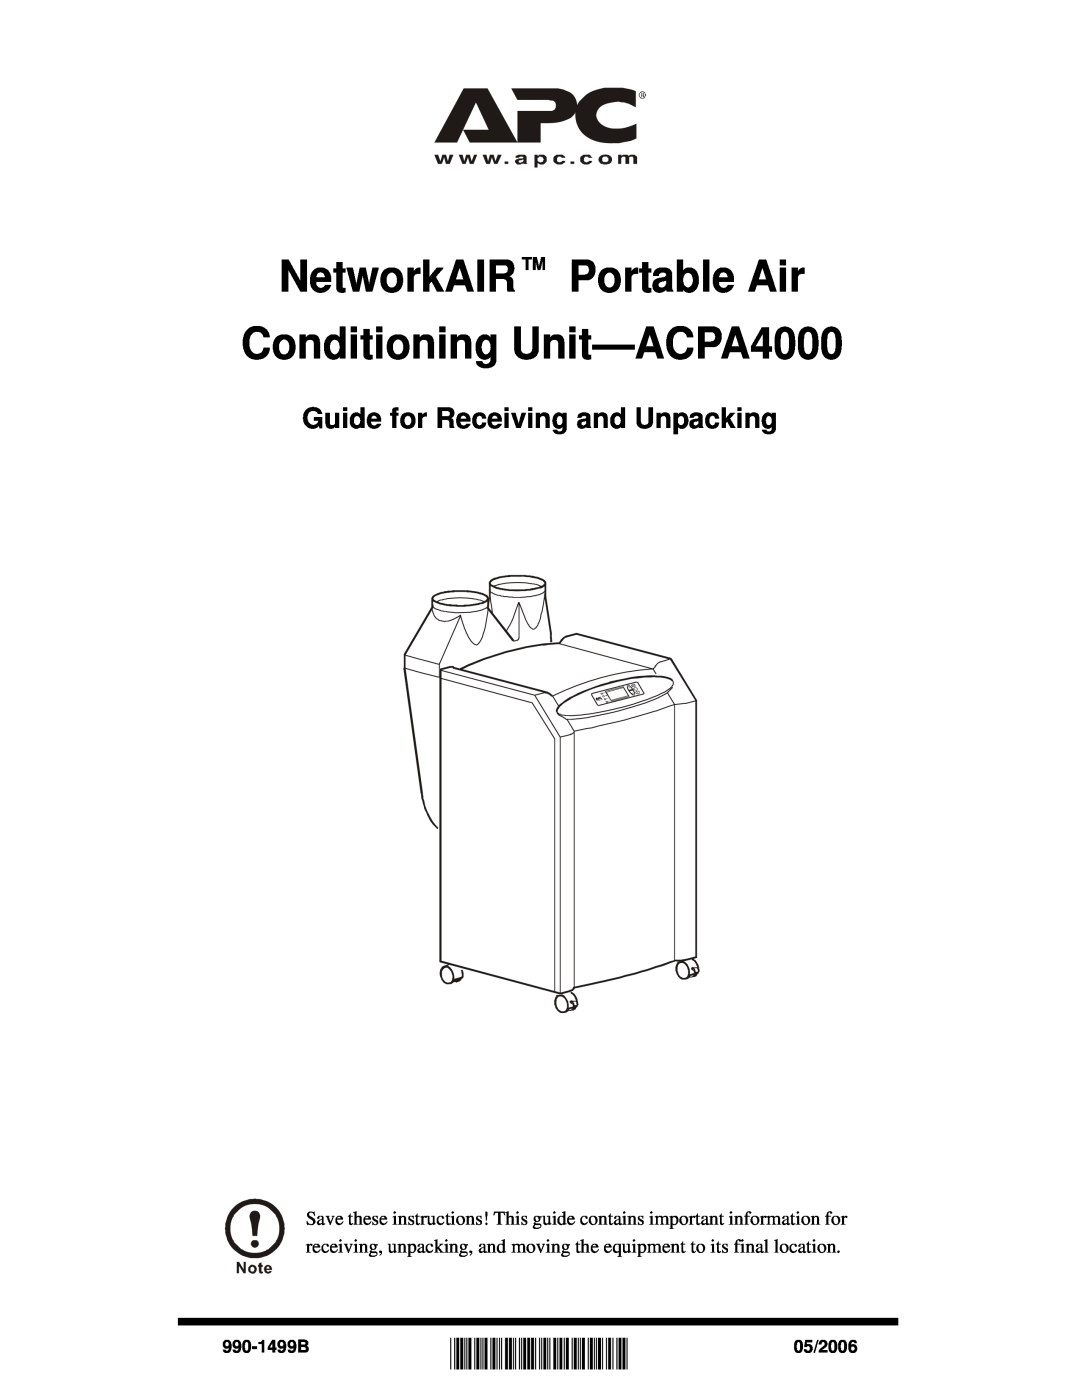 American Power Conversion manual 990-1499B, NetworkAIR Portable Air, Conditioning Unit-ACPA4000, 05/2006 